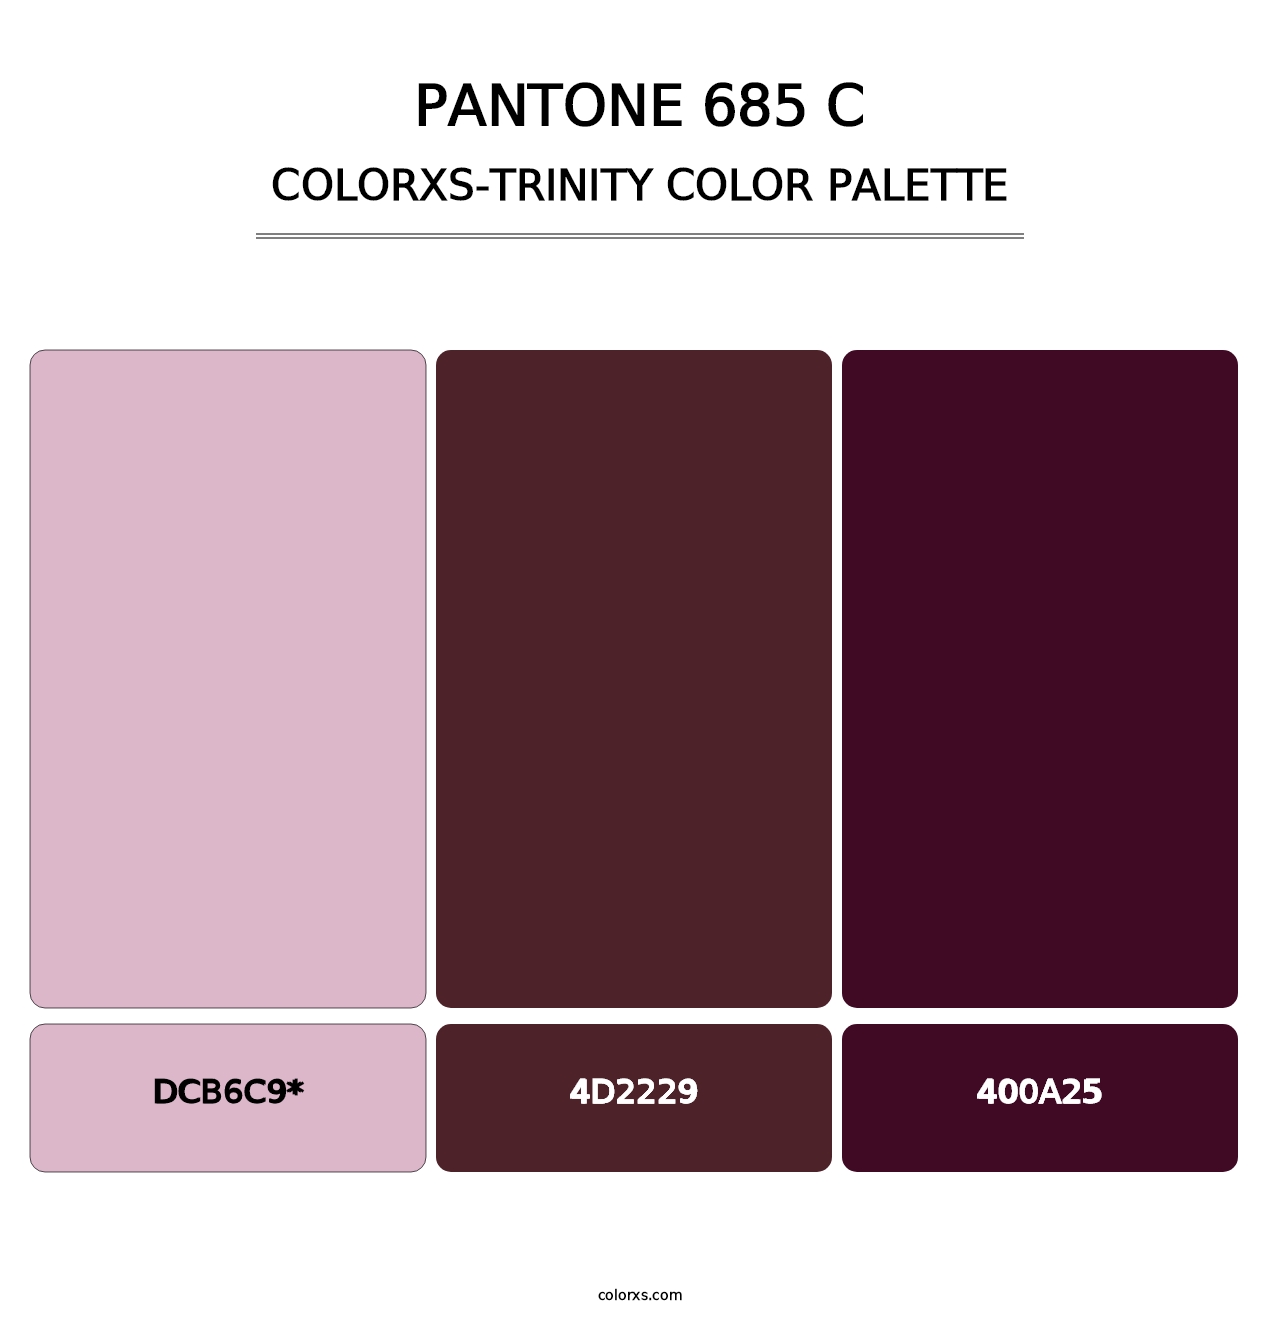 PANTONE 685 C - Colorxs Trinity Palette